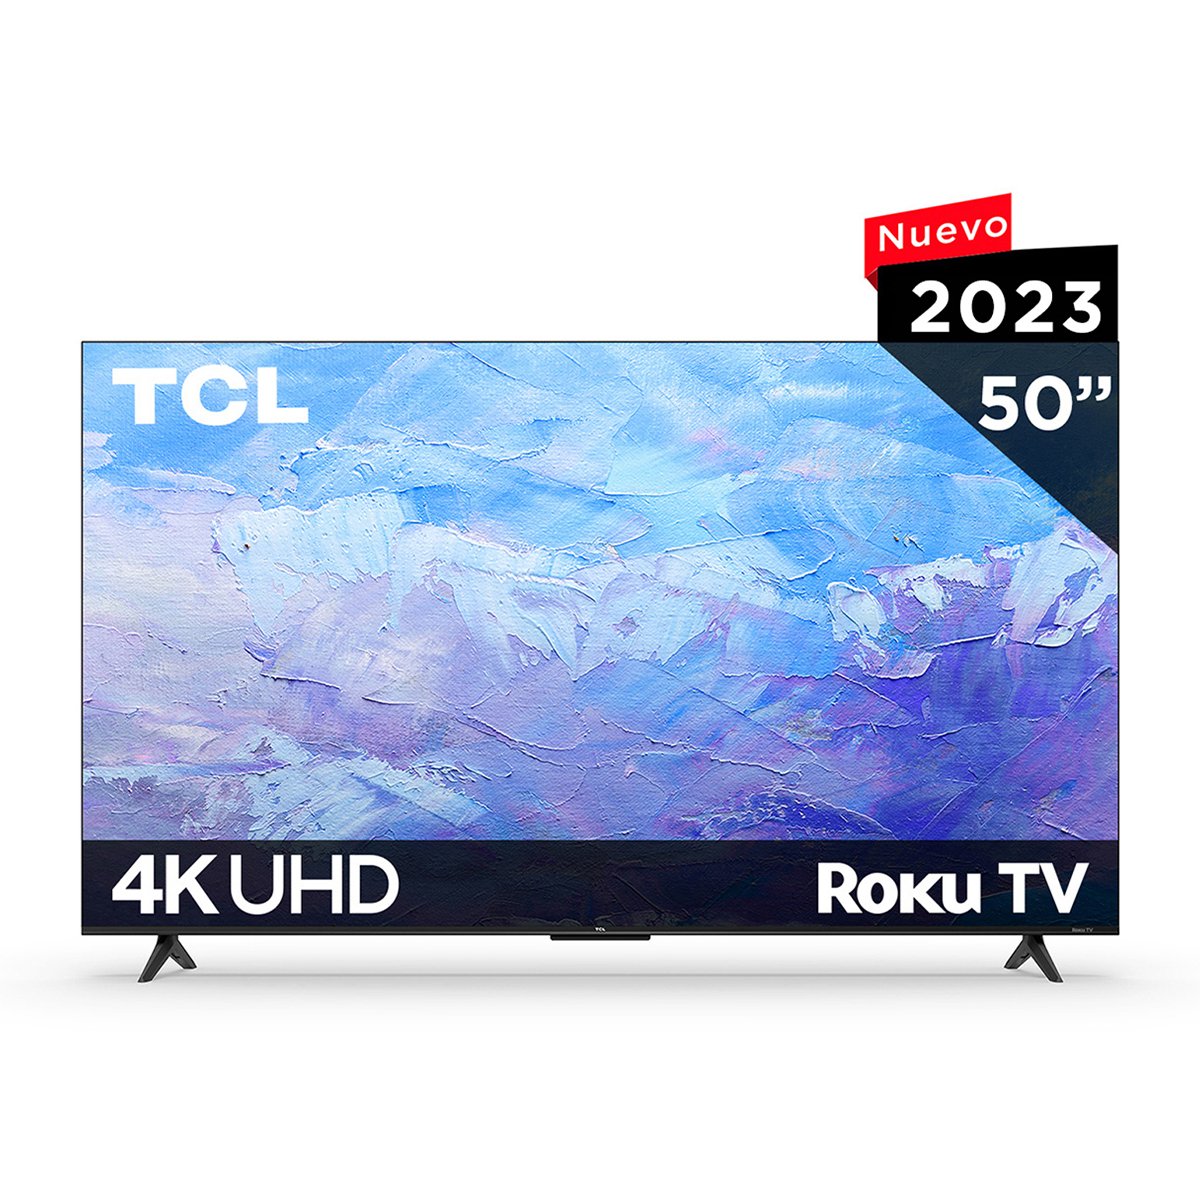 Corotos  TCL SMART TV 50 PULGADAS 4K ULTRA HD